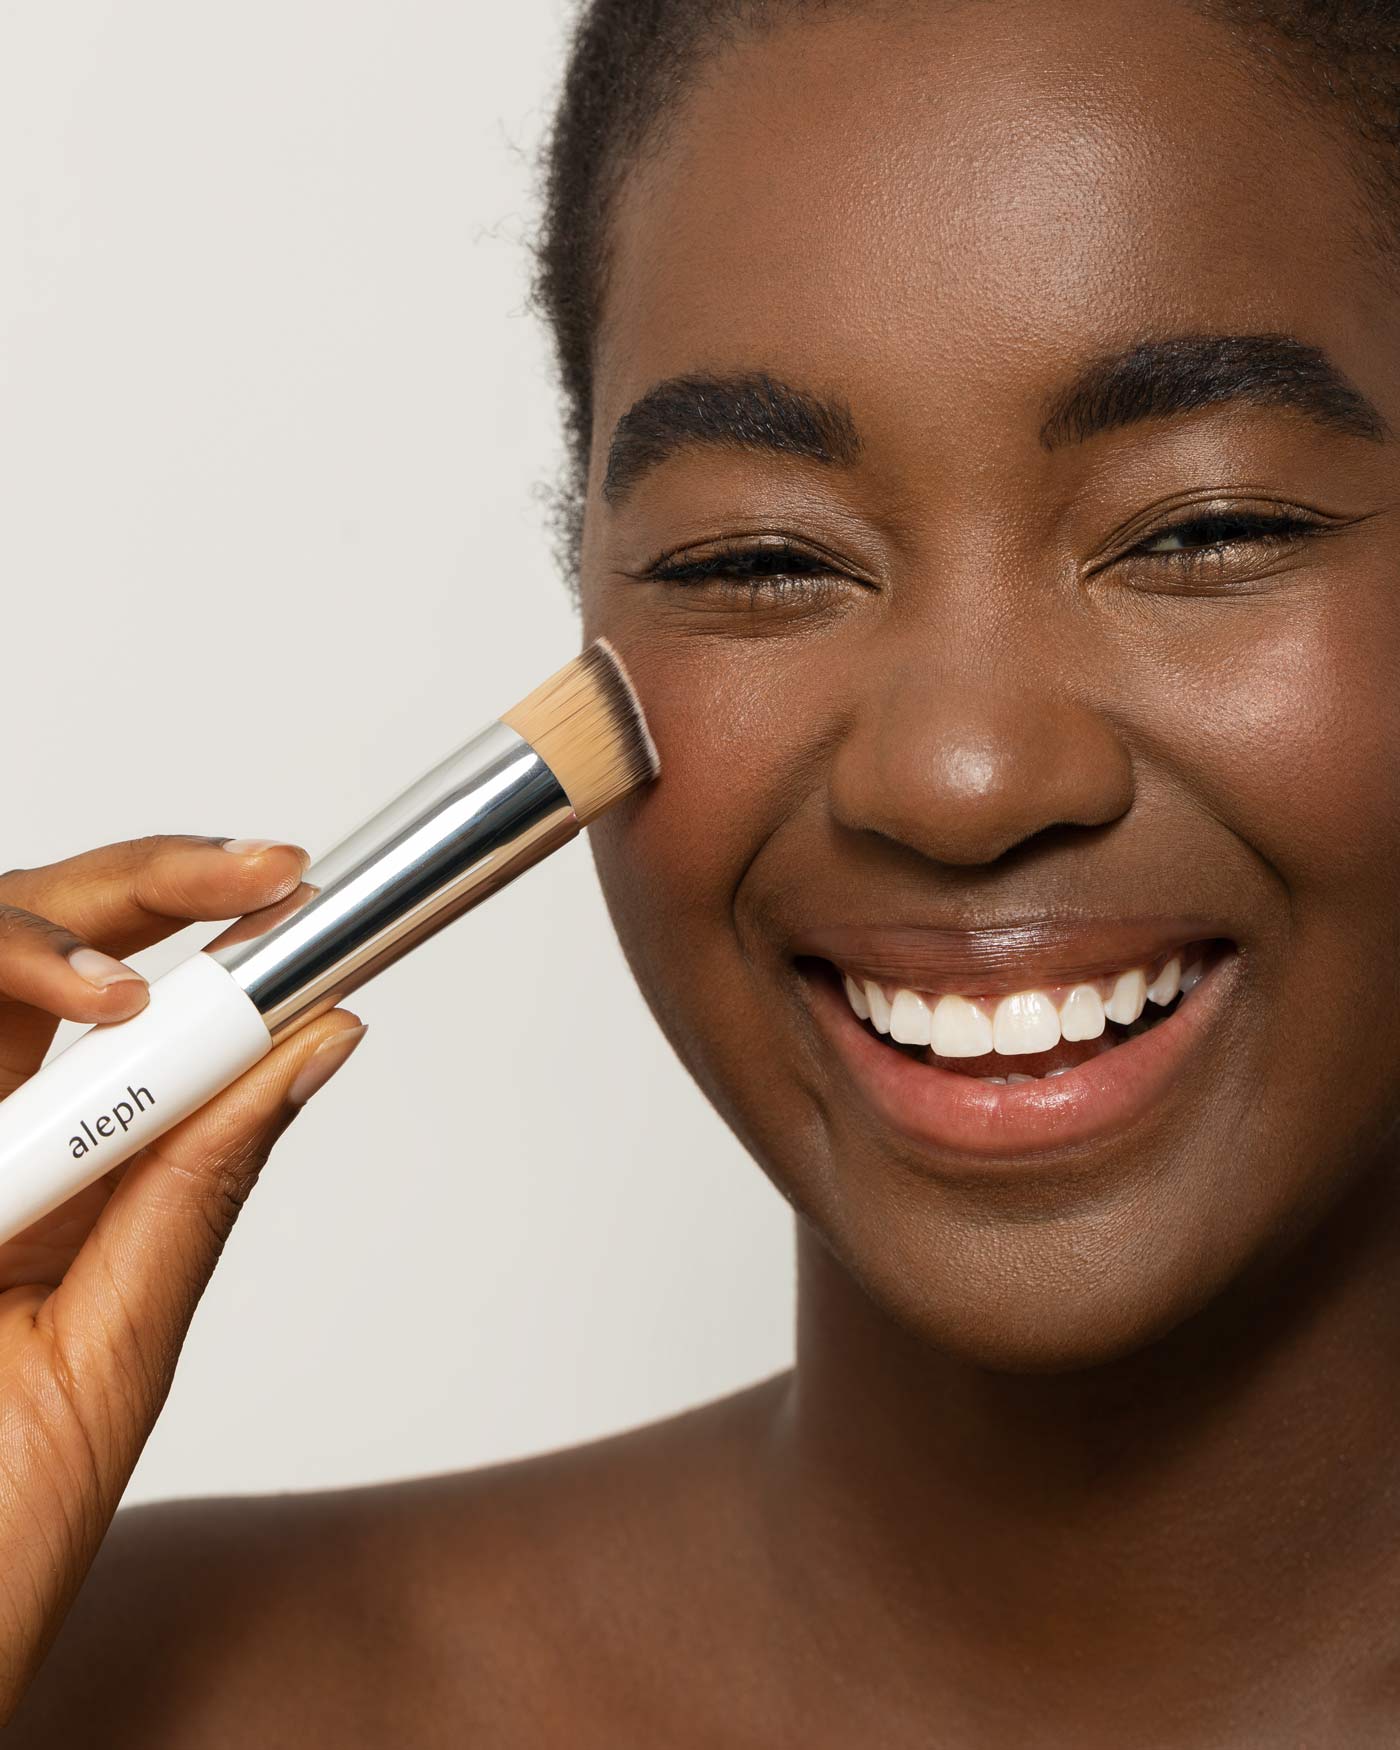 Maintaining Makeup Brushes: Hygiene, Storage, and Use